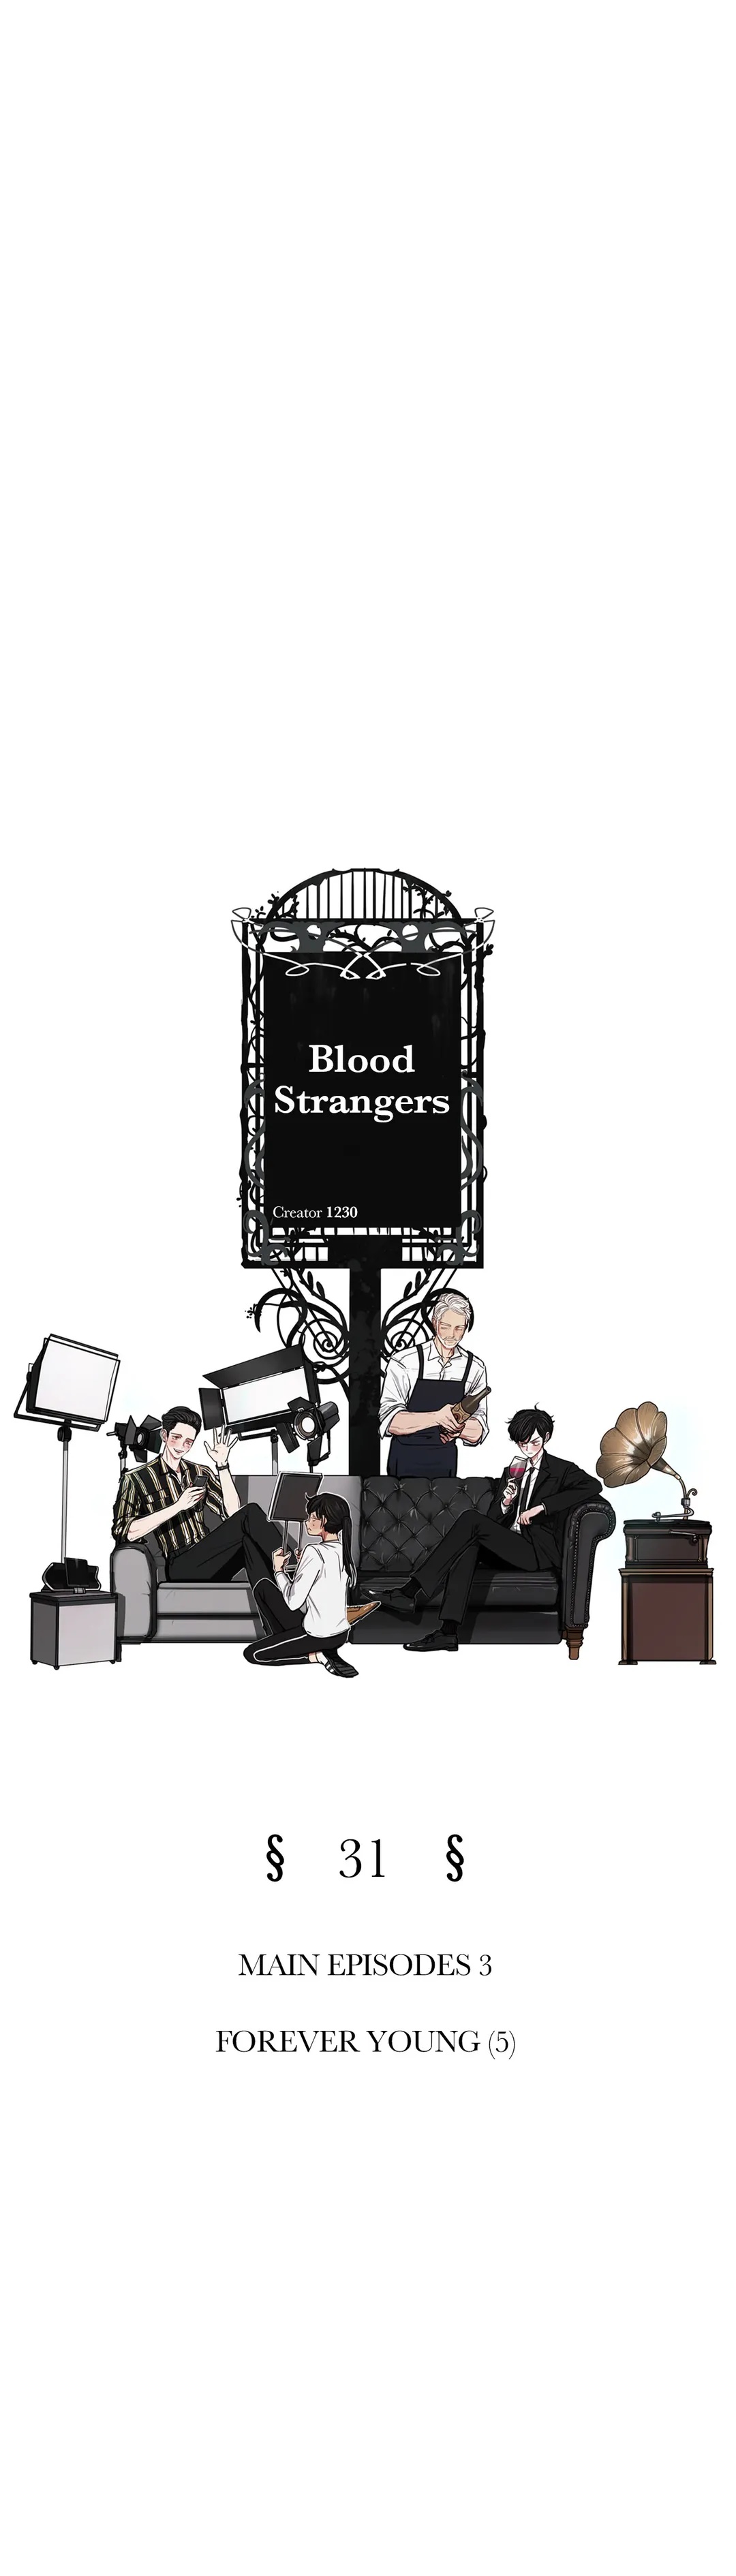 Blood Strangers image